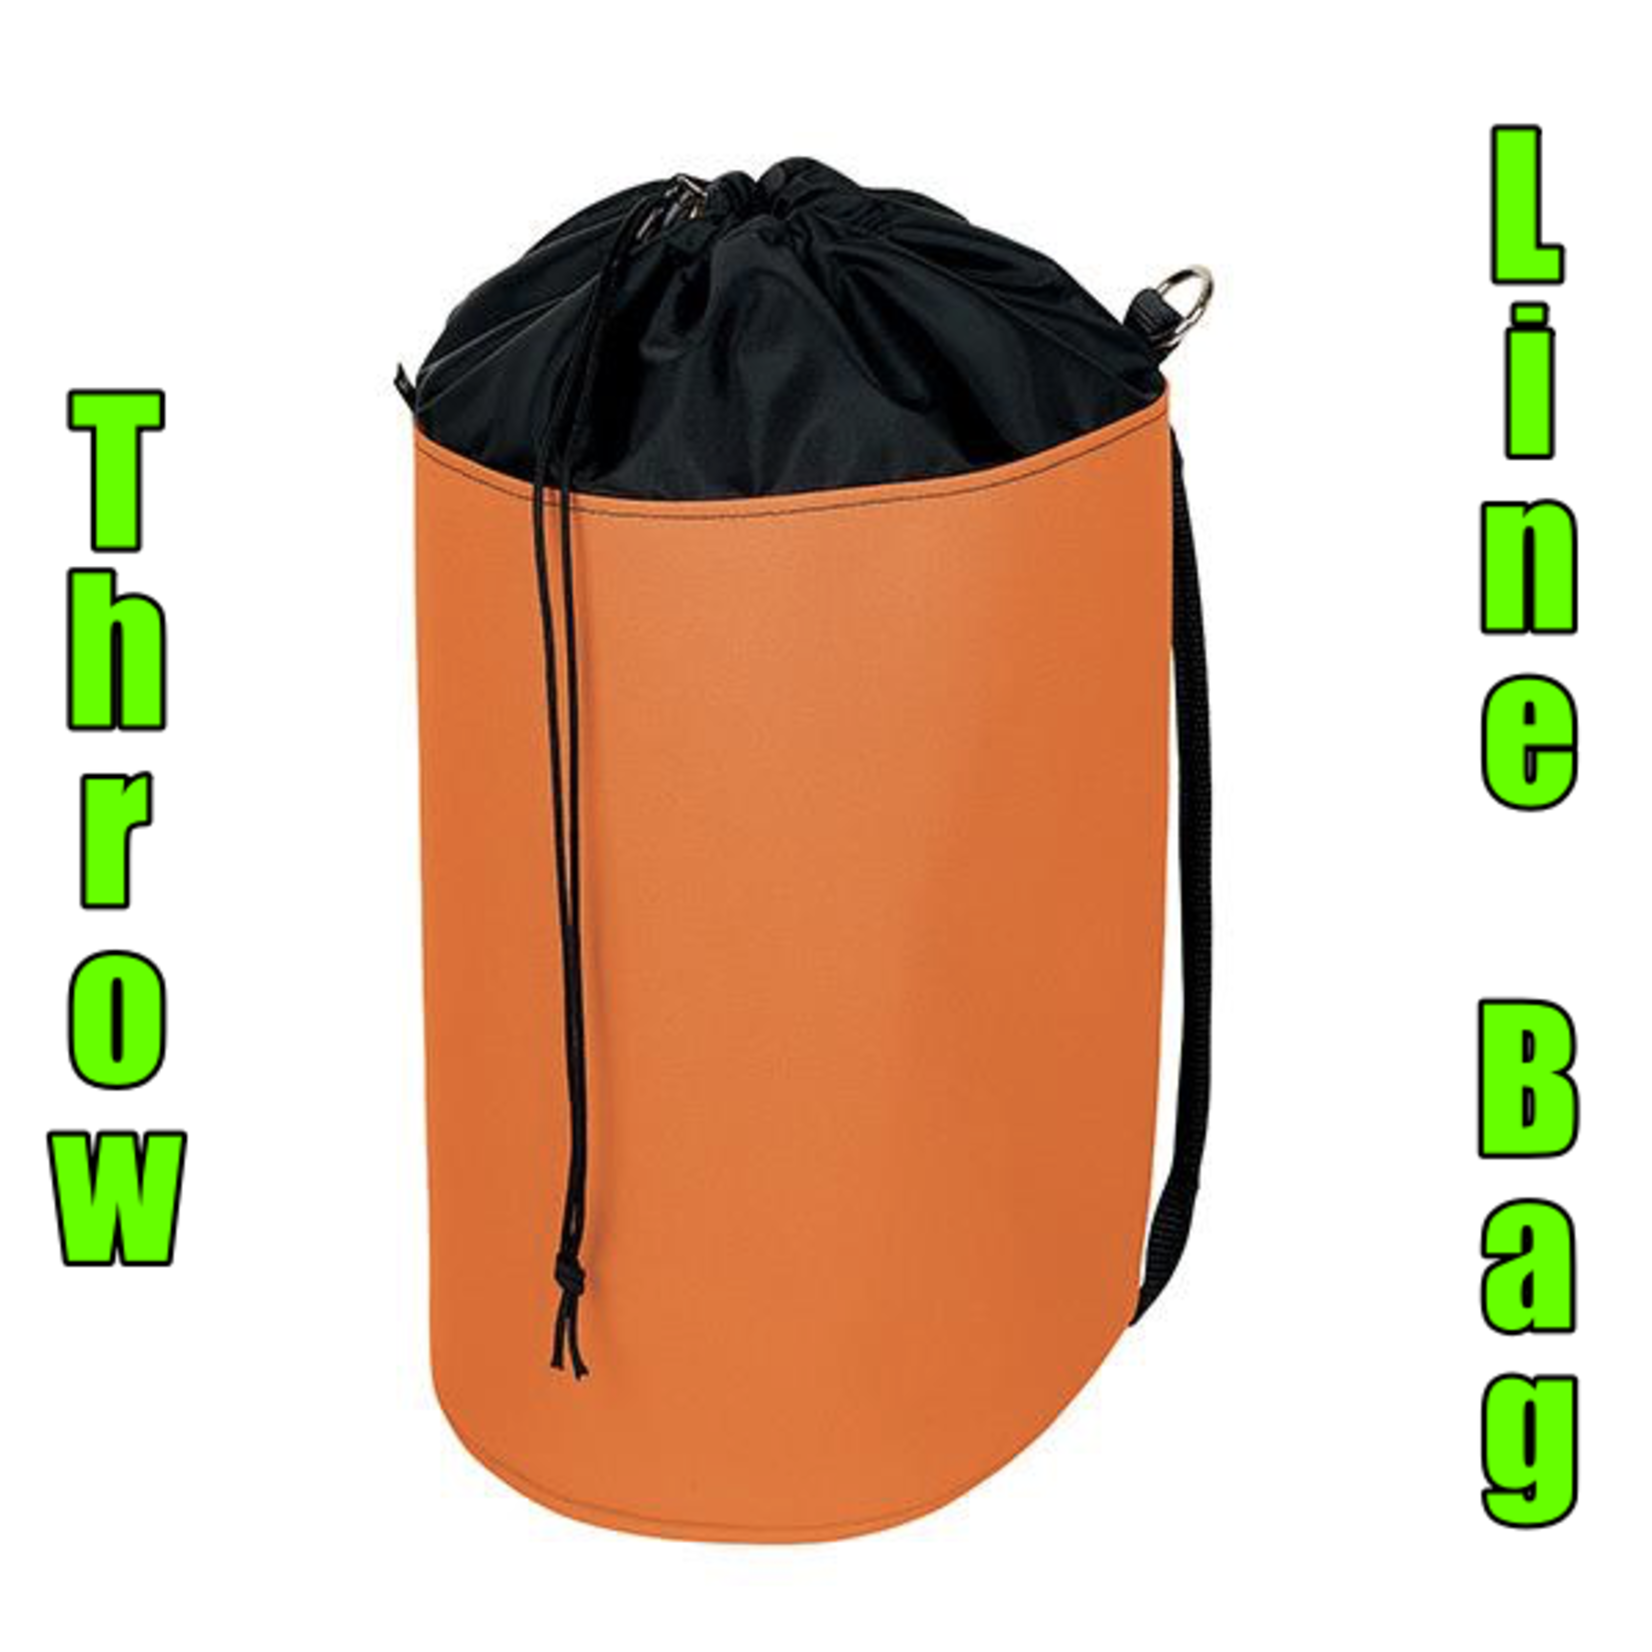 Weaver Weaver - Throw Line Bag - Large, Orange